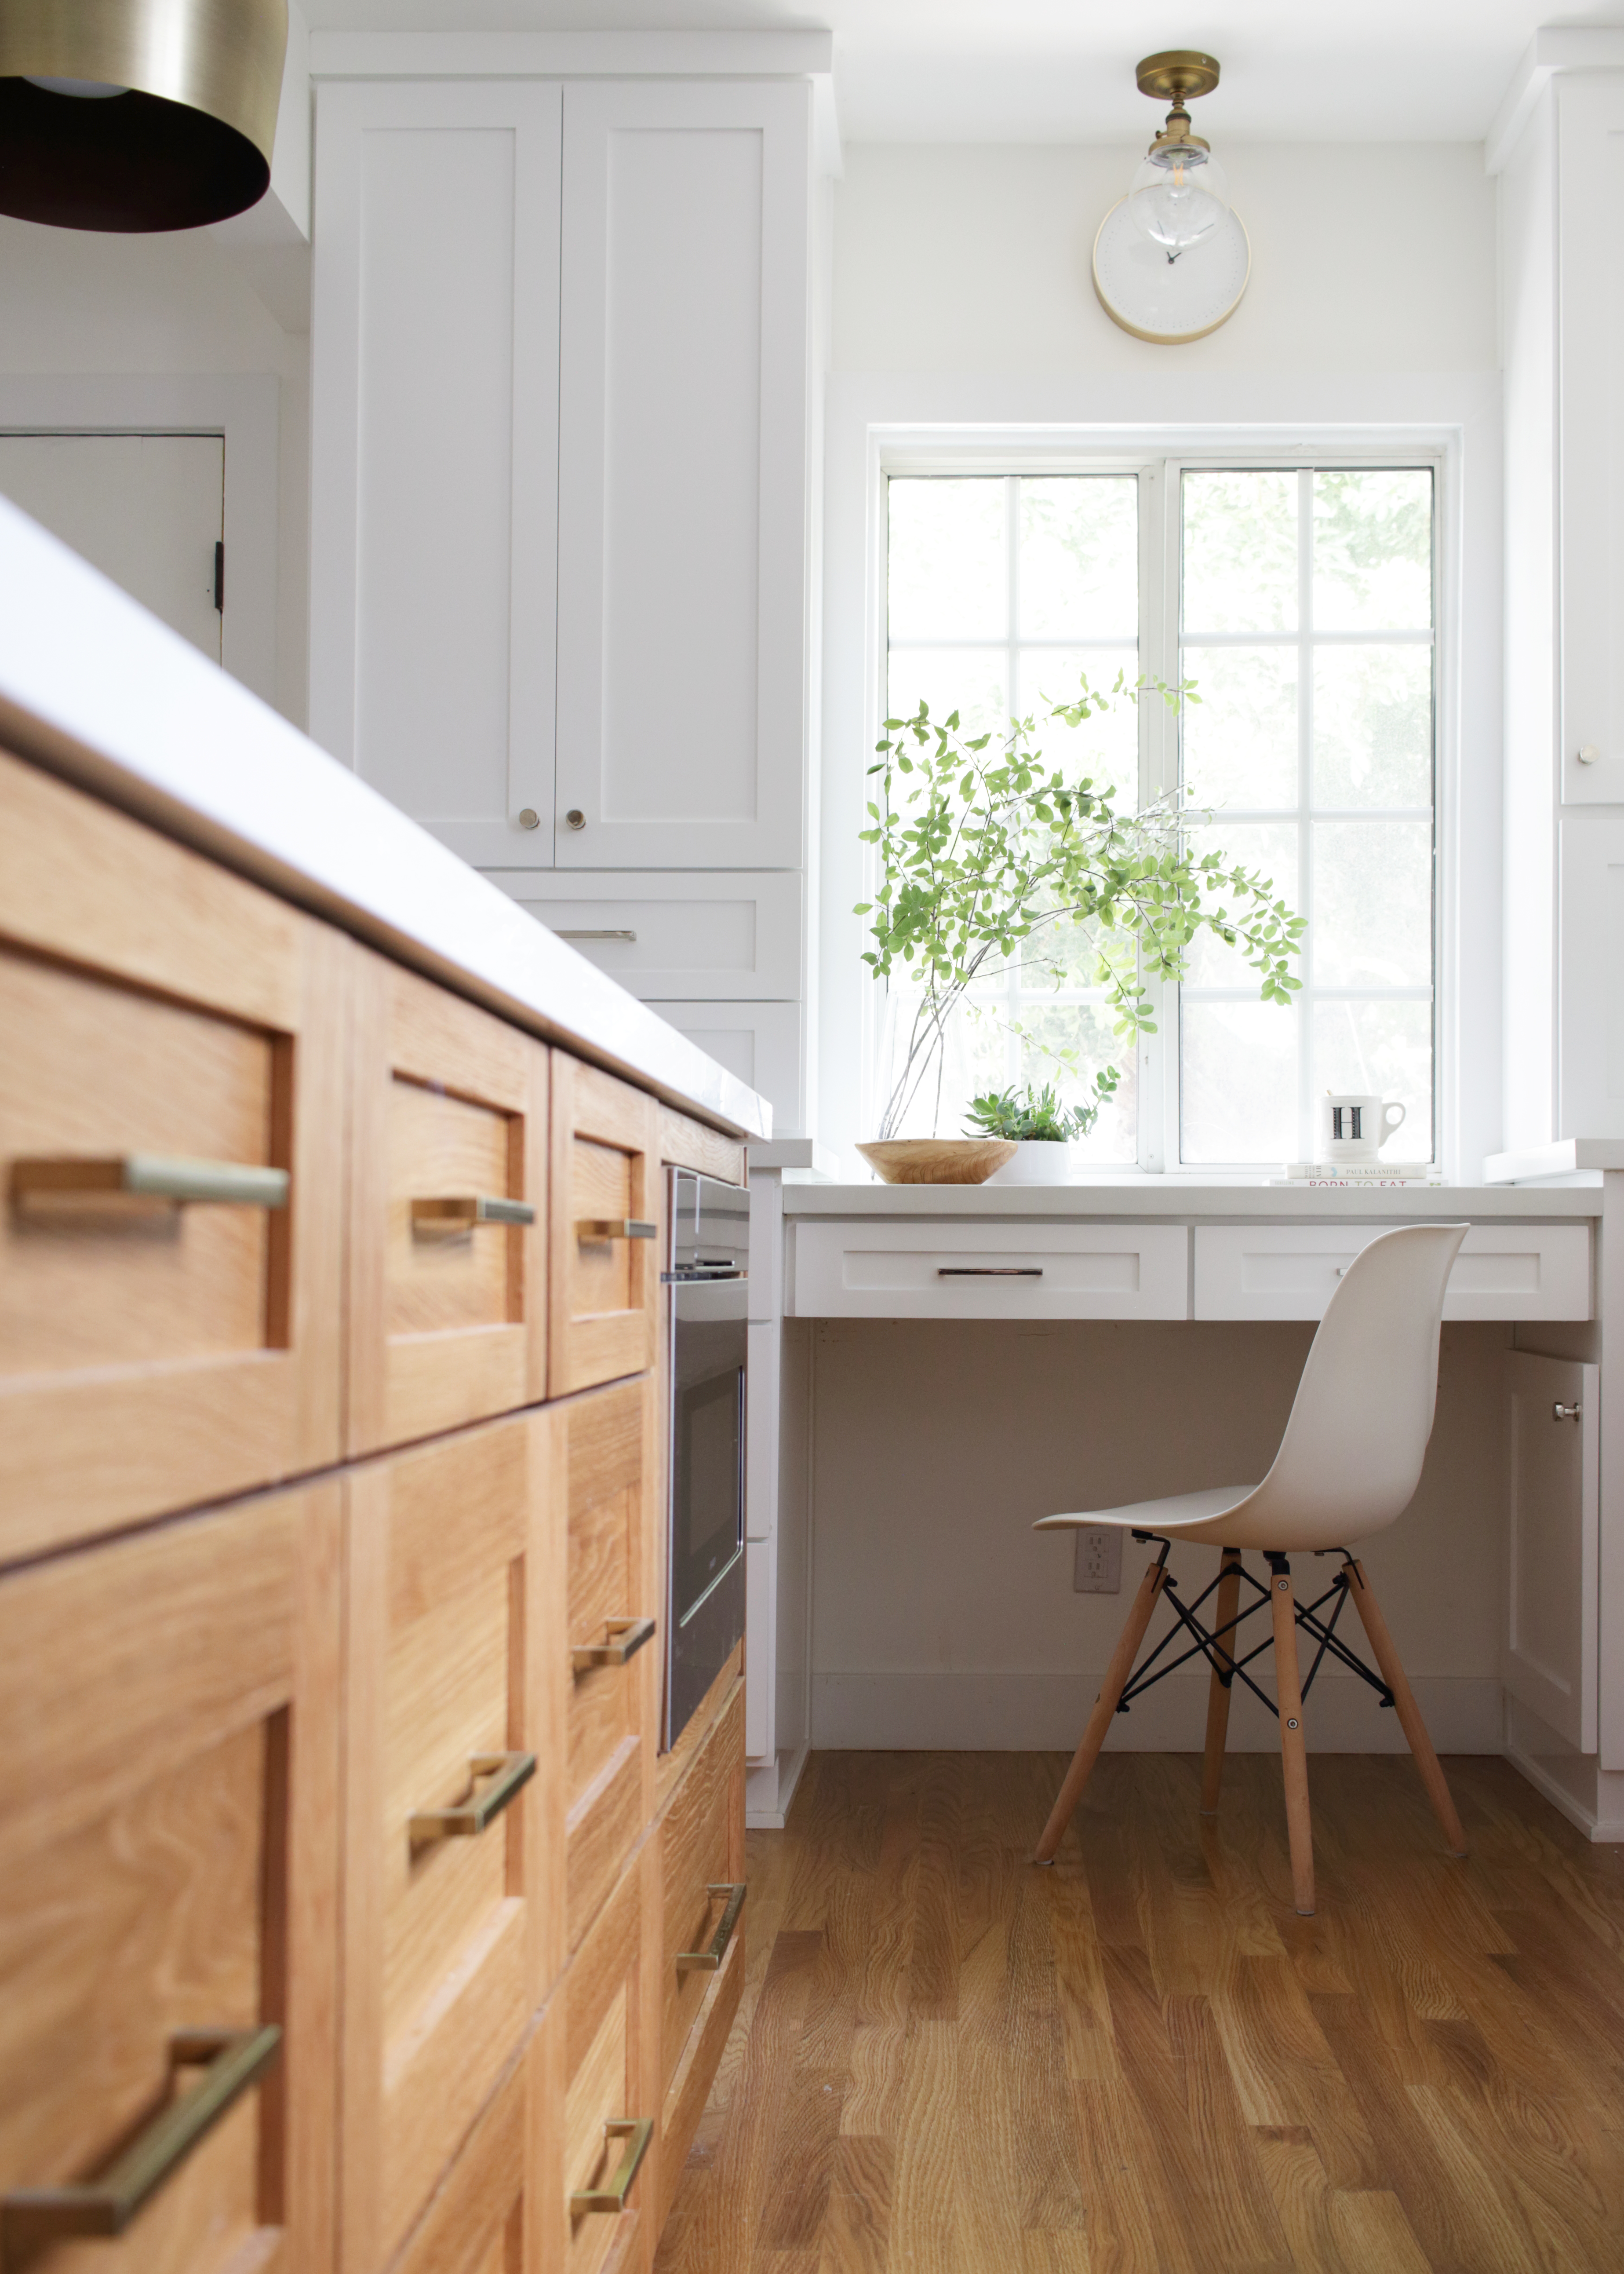 LA white kitchen with oak flooring